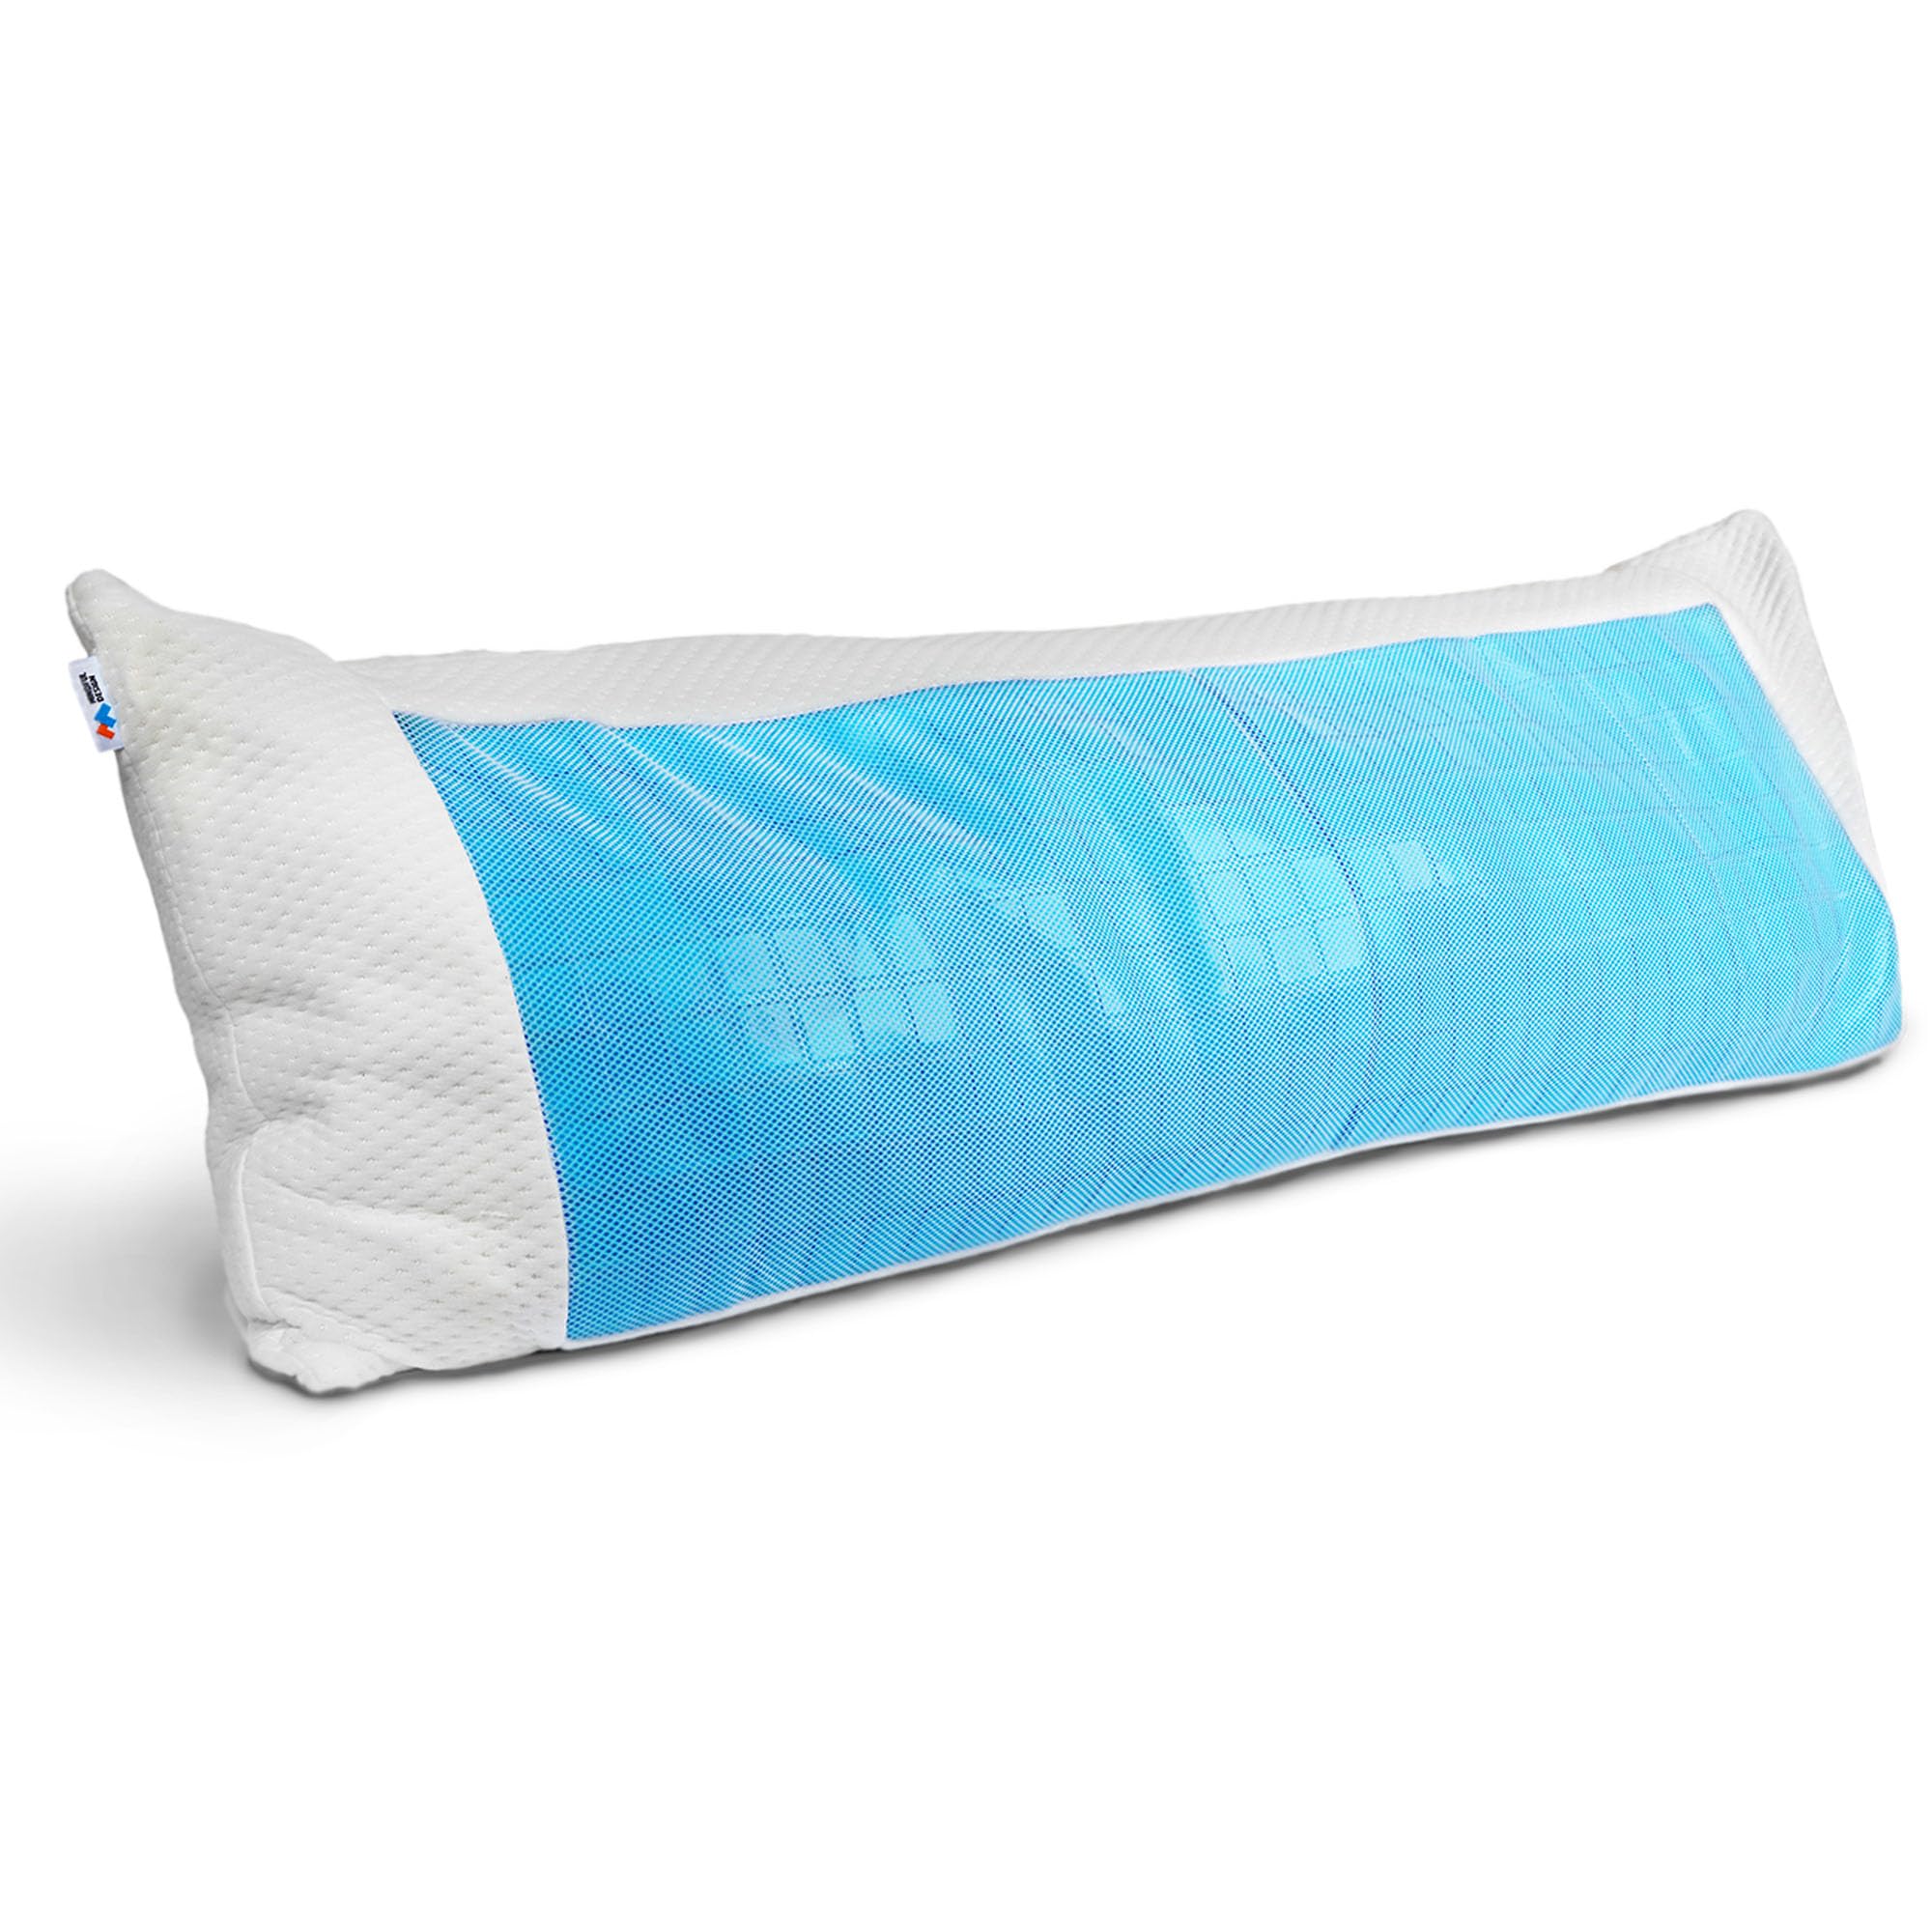 Mindful Design Cooling Memory Foam Full Body Pillow - Extra Firm Full Shredded Memory Foam Body Pillow w/Cooling Gel, Support